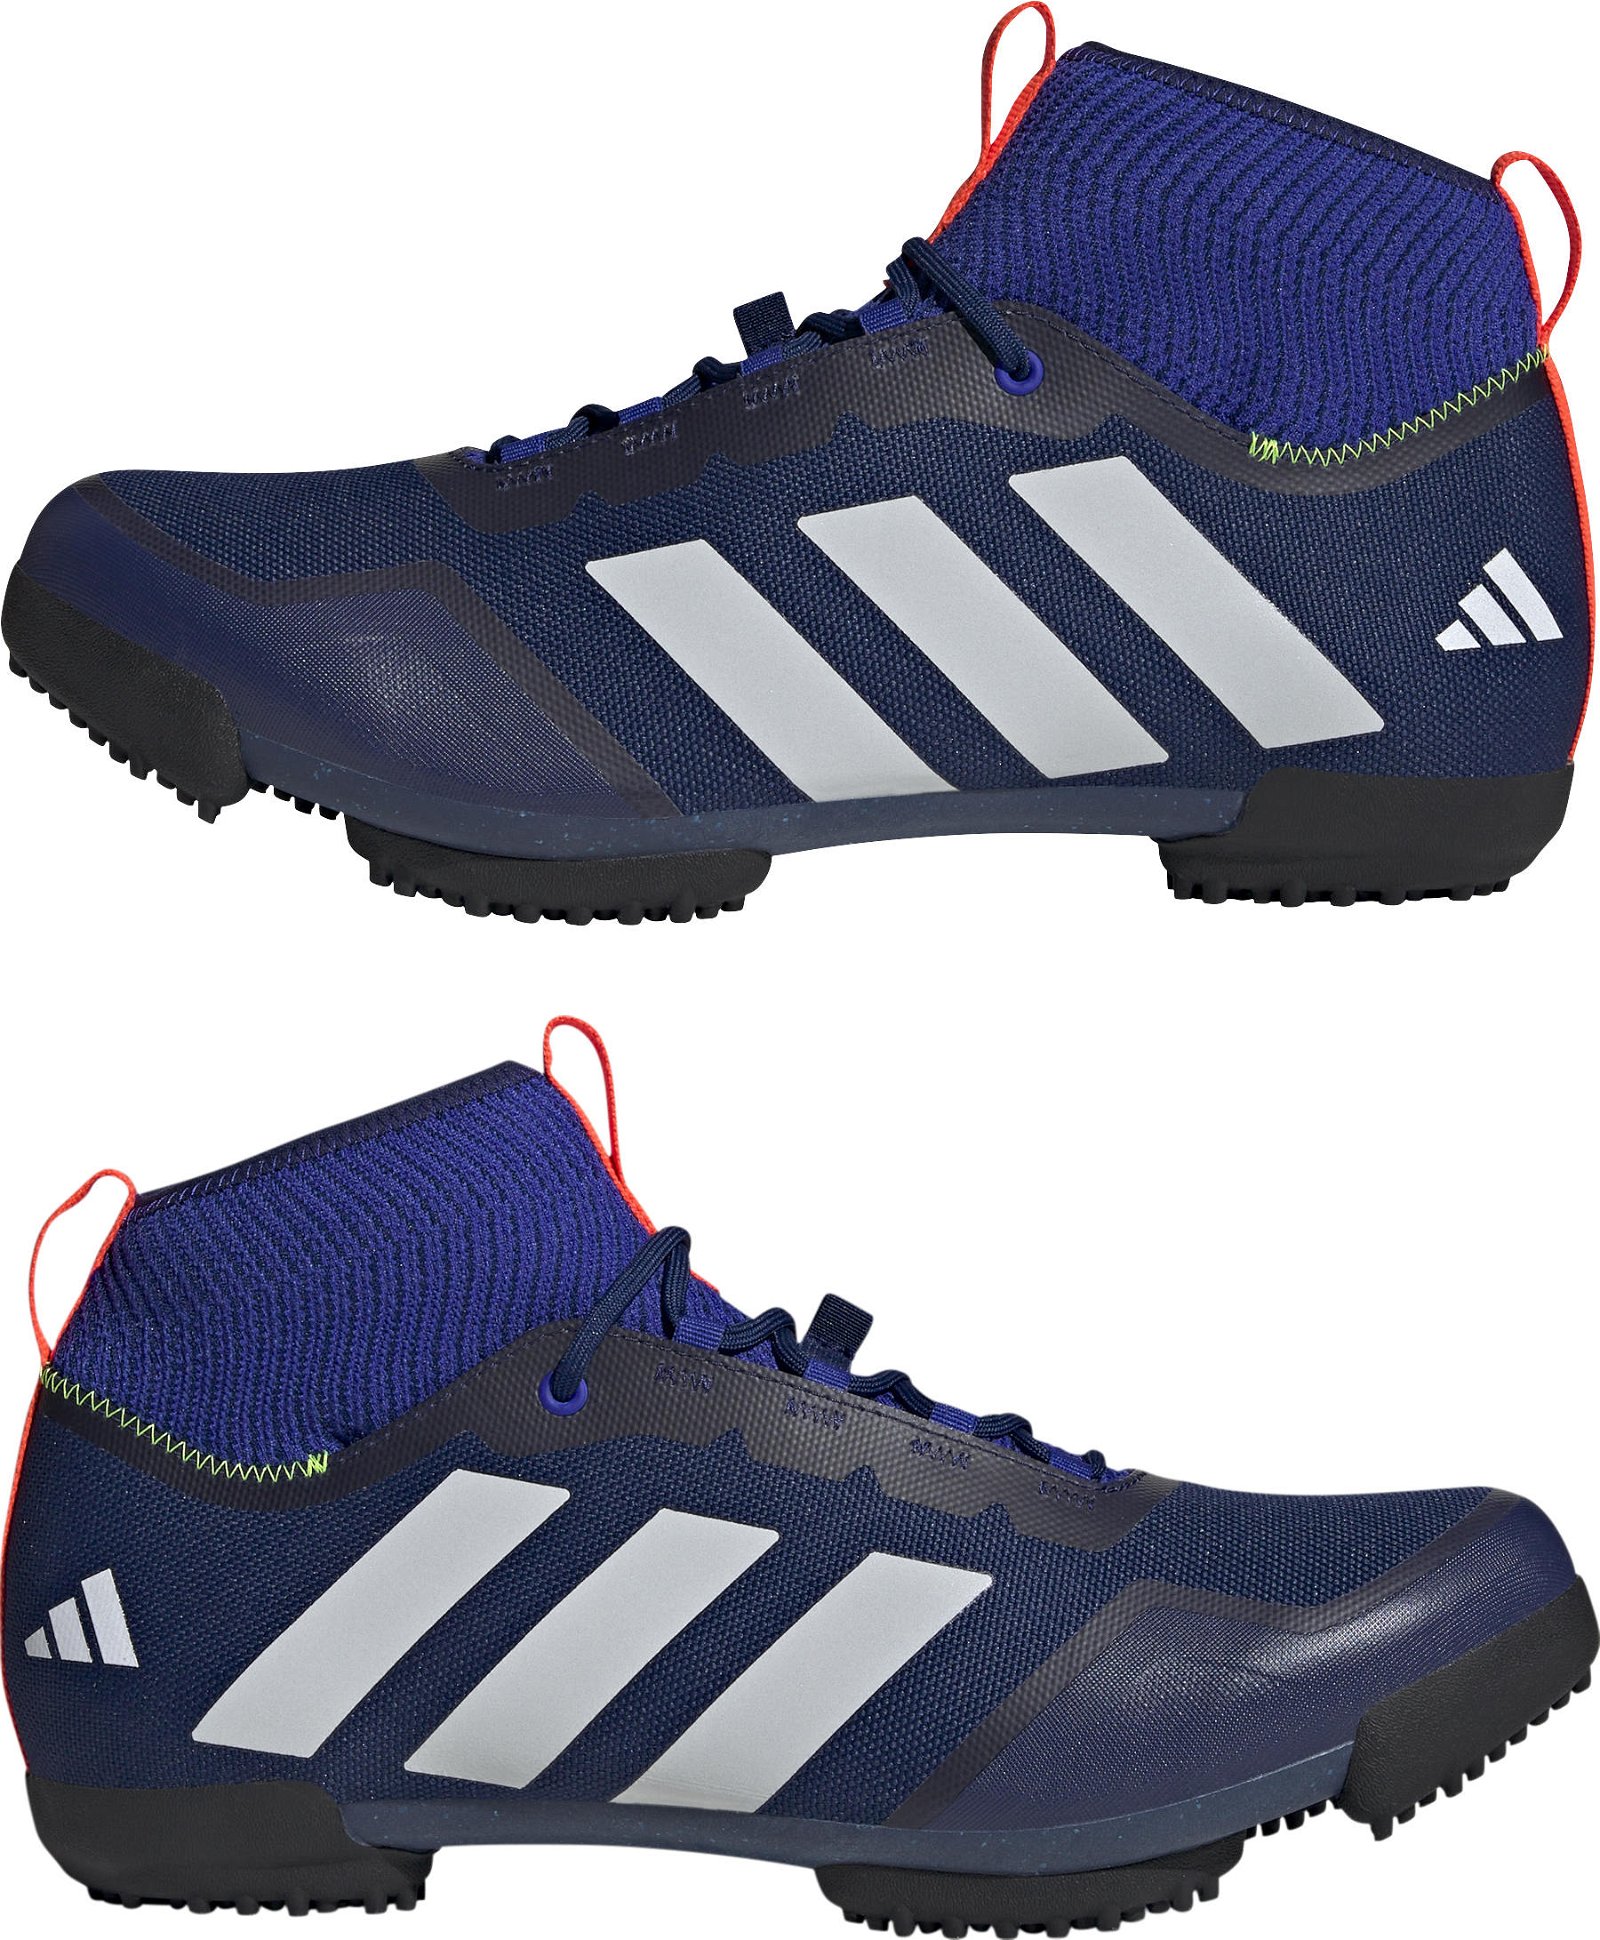 Adidas The Gravel Shoe 2.0